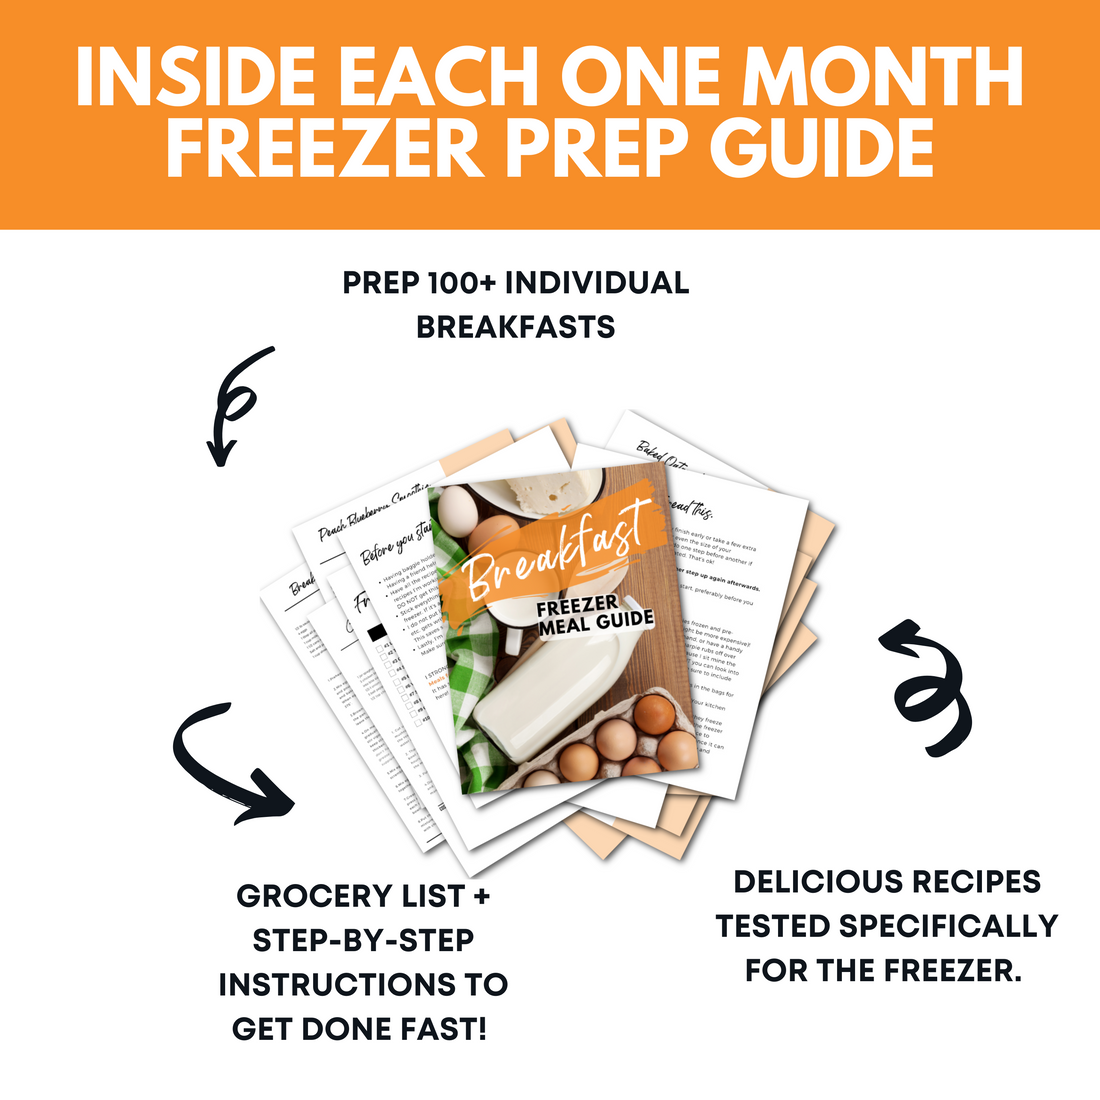 The Breakfast Freezer Meal Guide